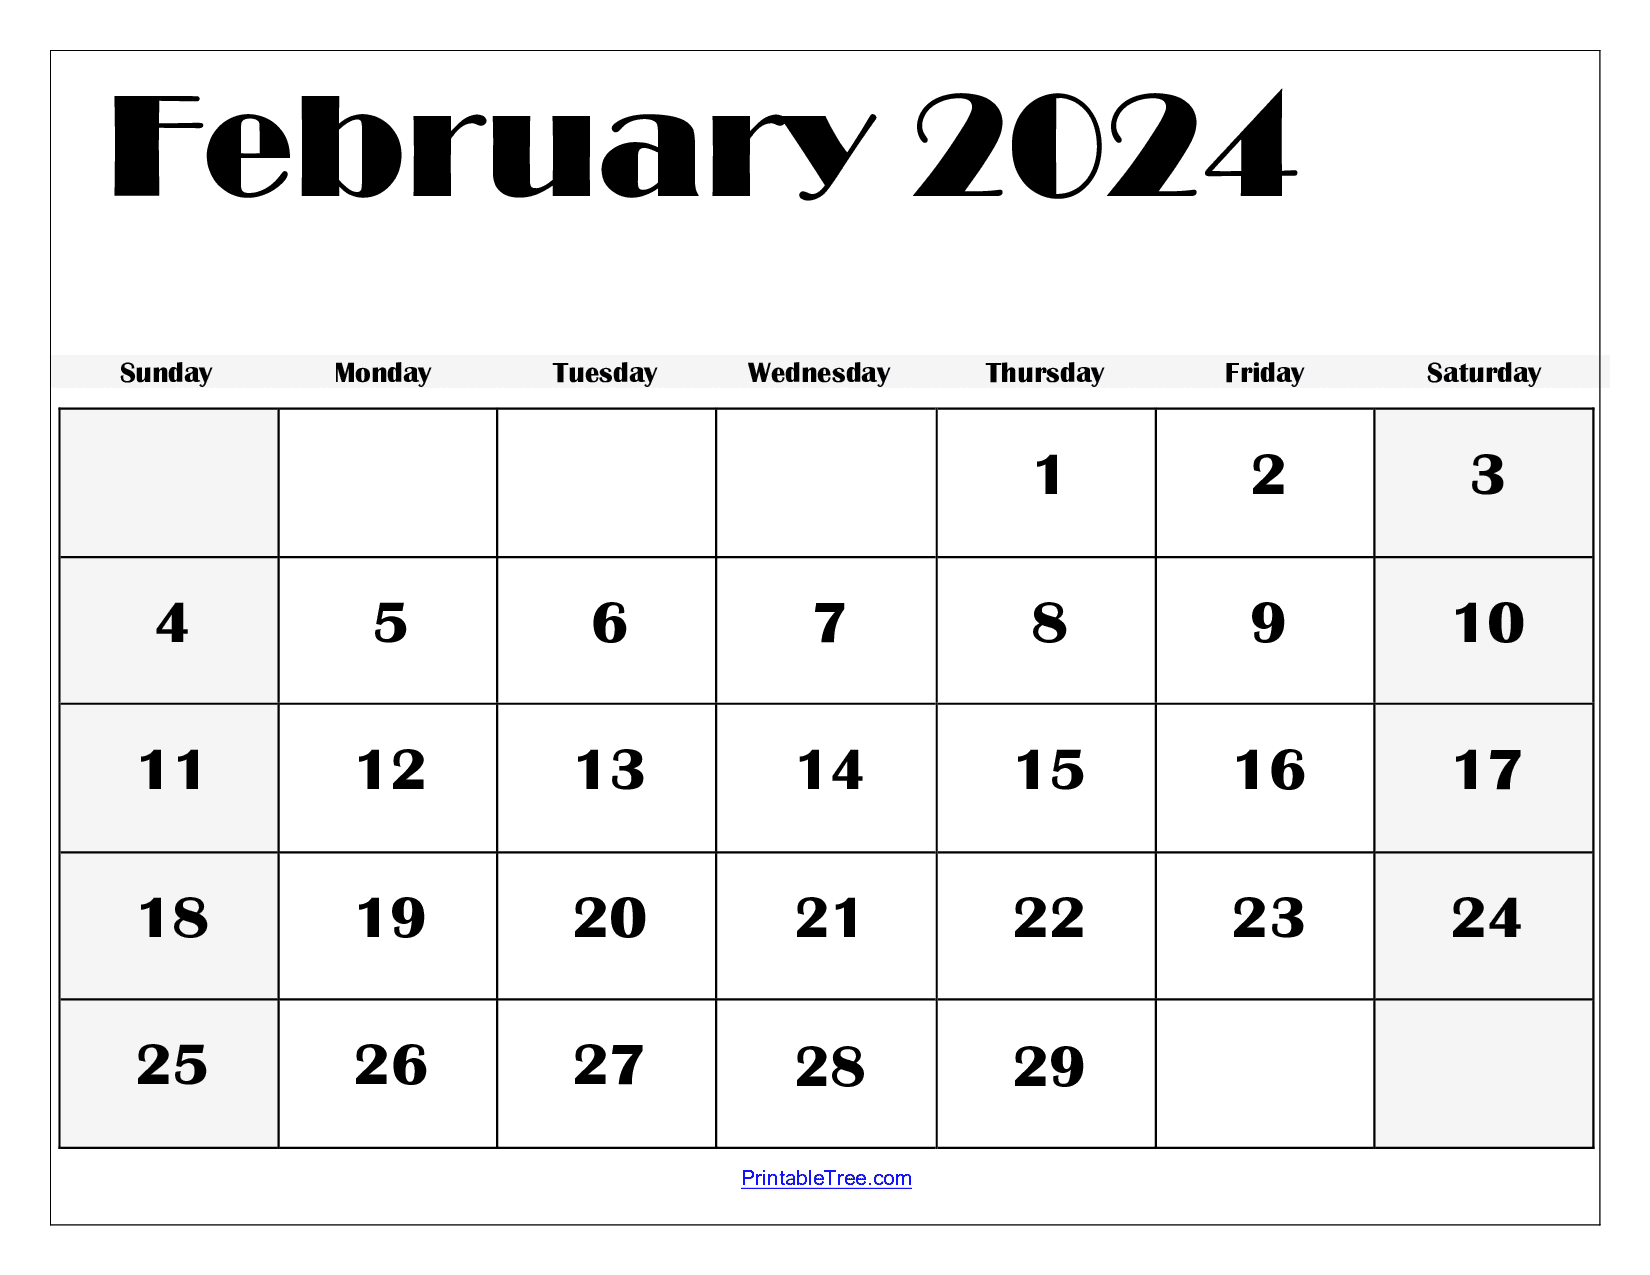 February 2024 Calendar Printable Pdf Template With Holidays for February Calendar 2024 Free Printable